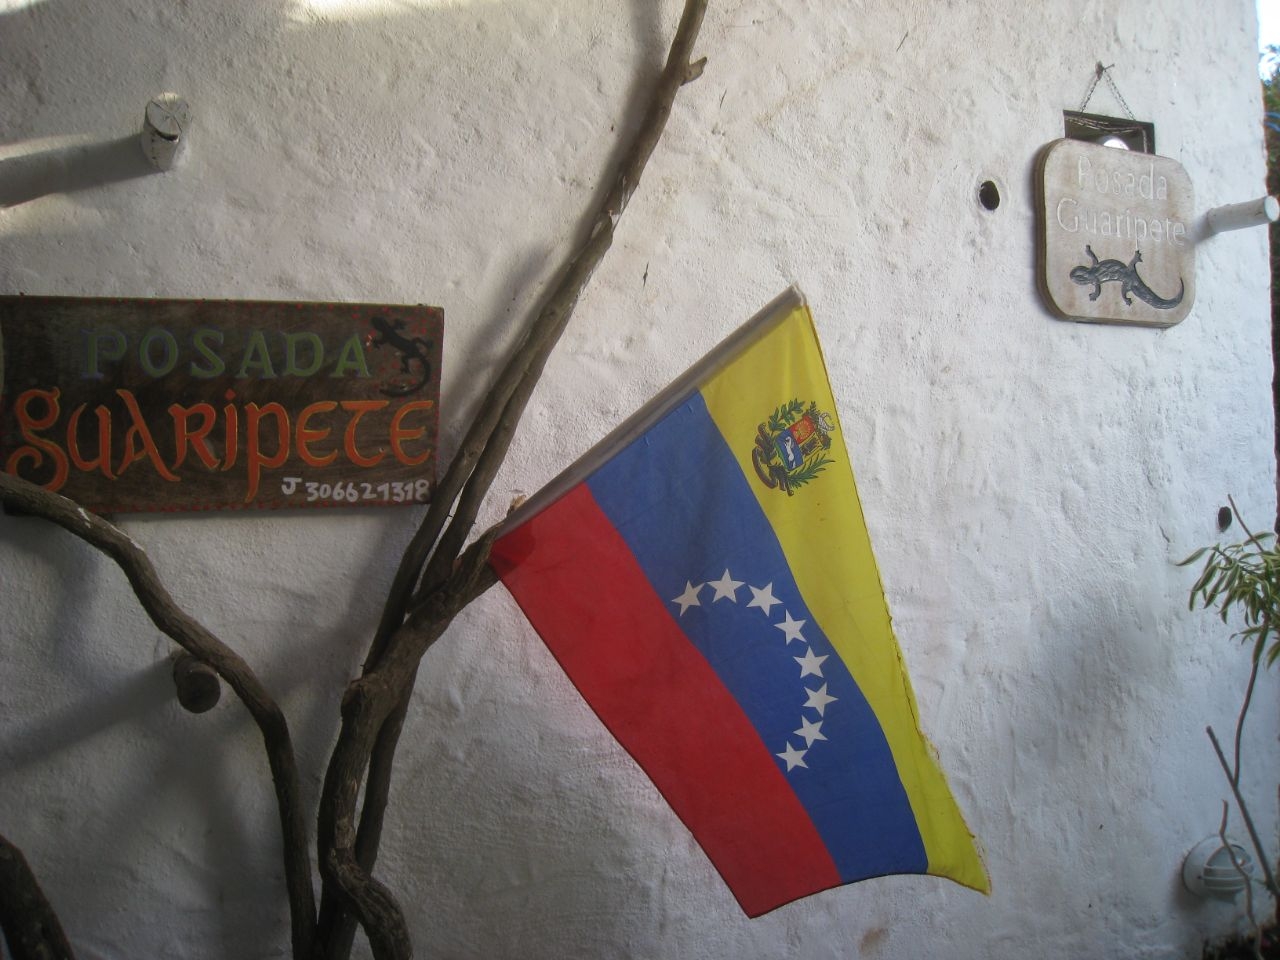 Посада Гуарипете Остров Эль-Гран-Роке, Венесуэла